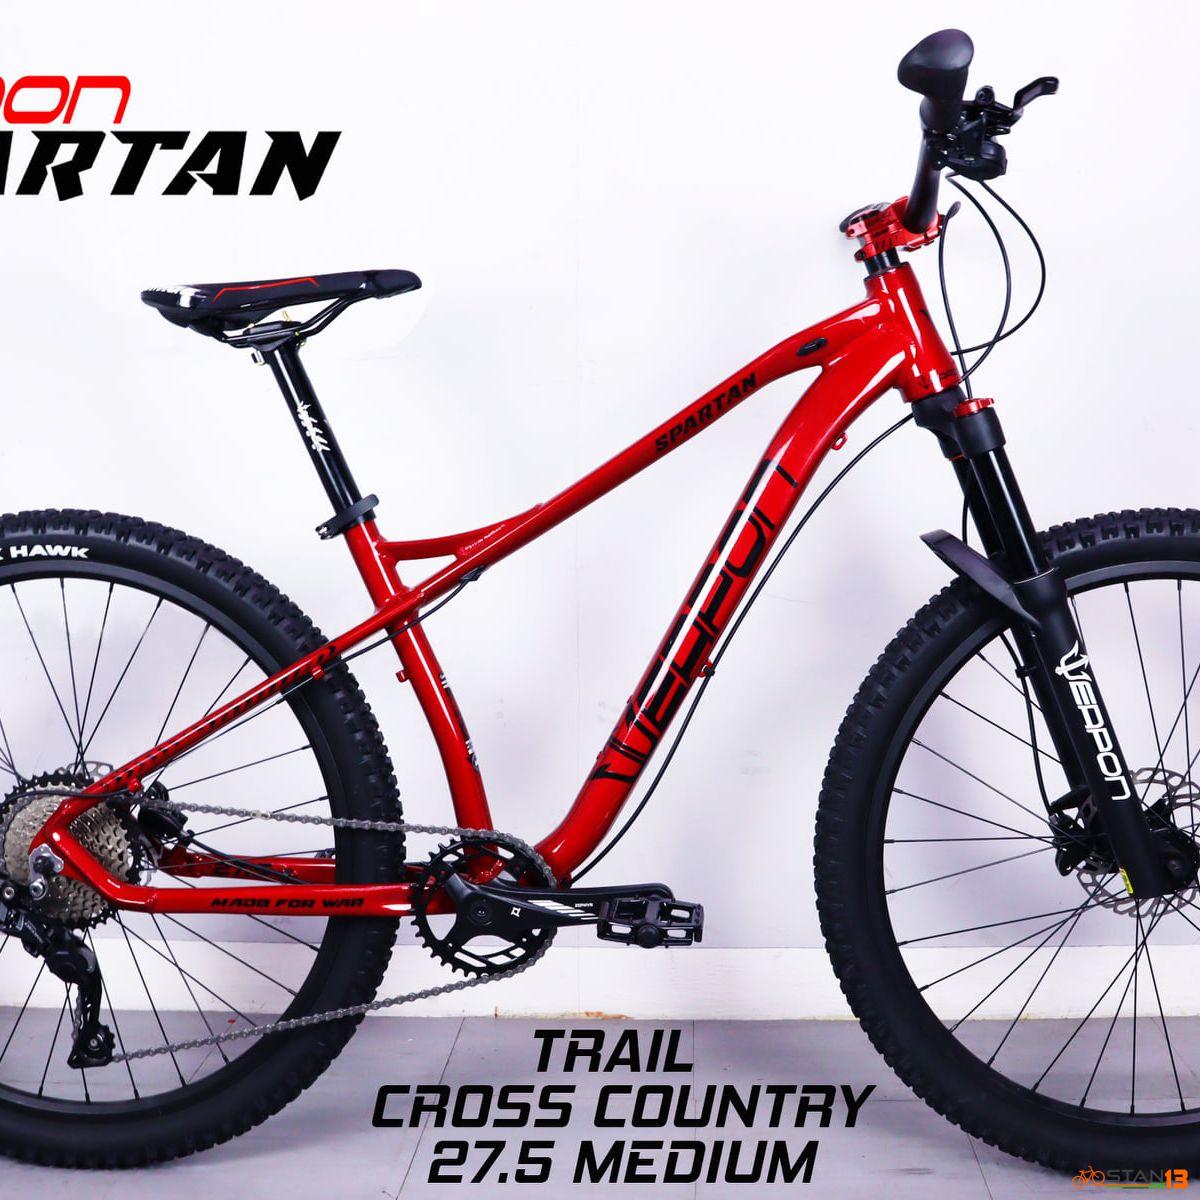 Spartan Trail Bike Deore Gears Air Fork Limited Edition